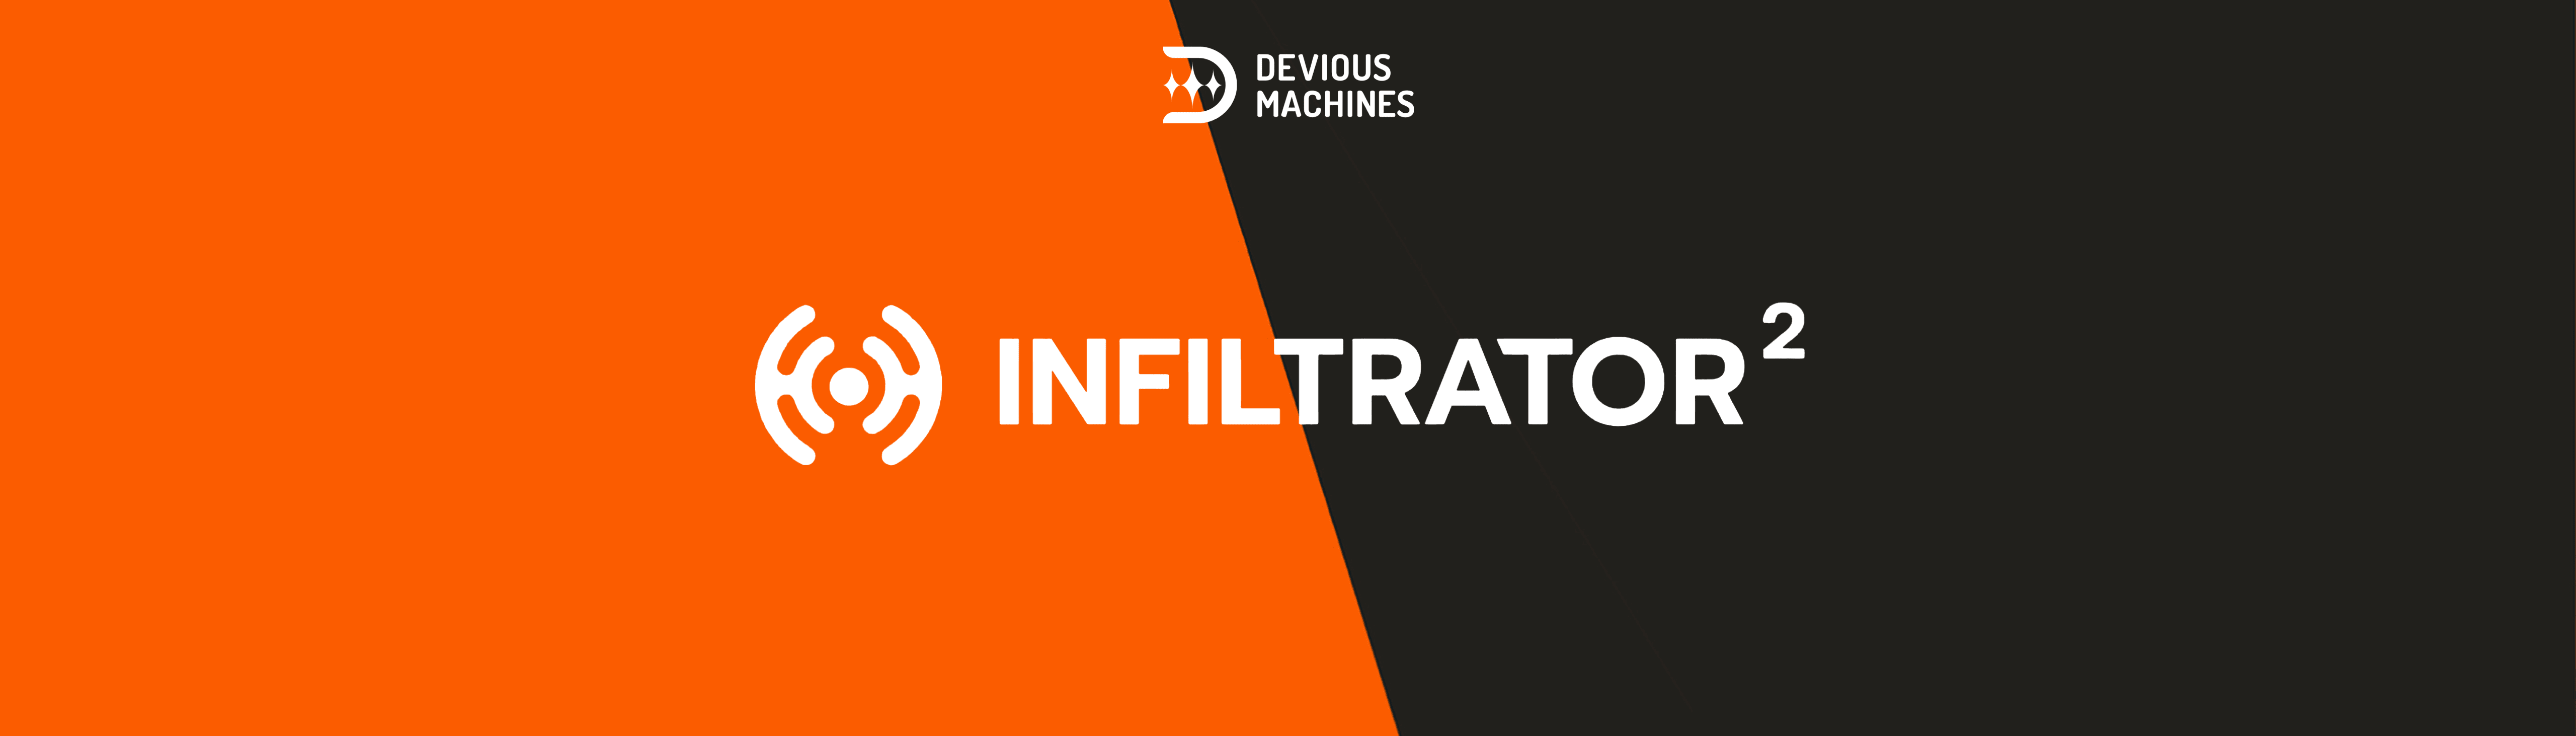 Devious Machines Infiltrator 2